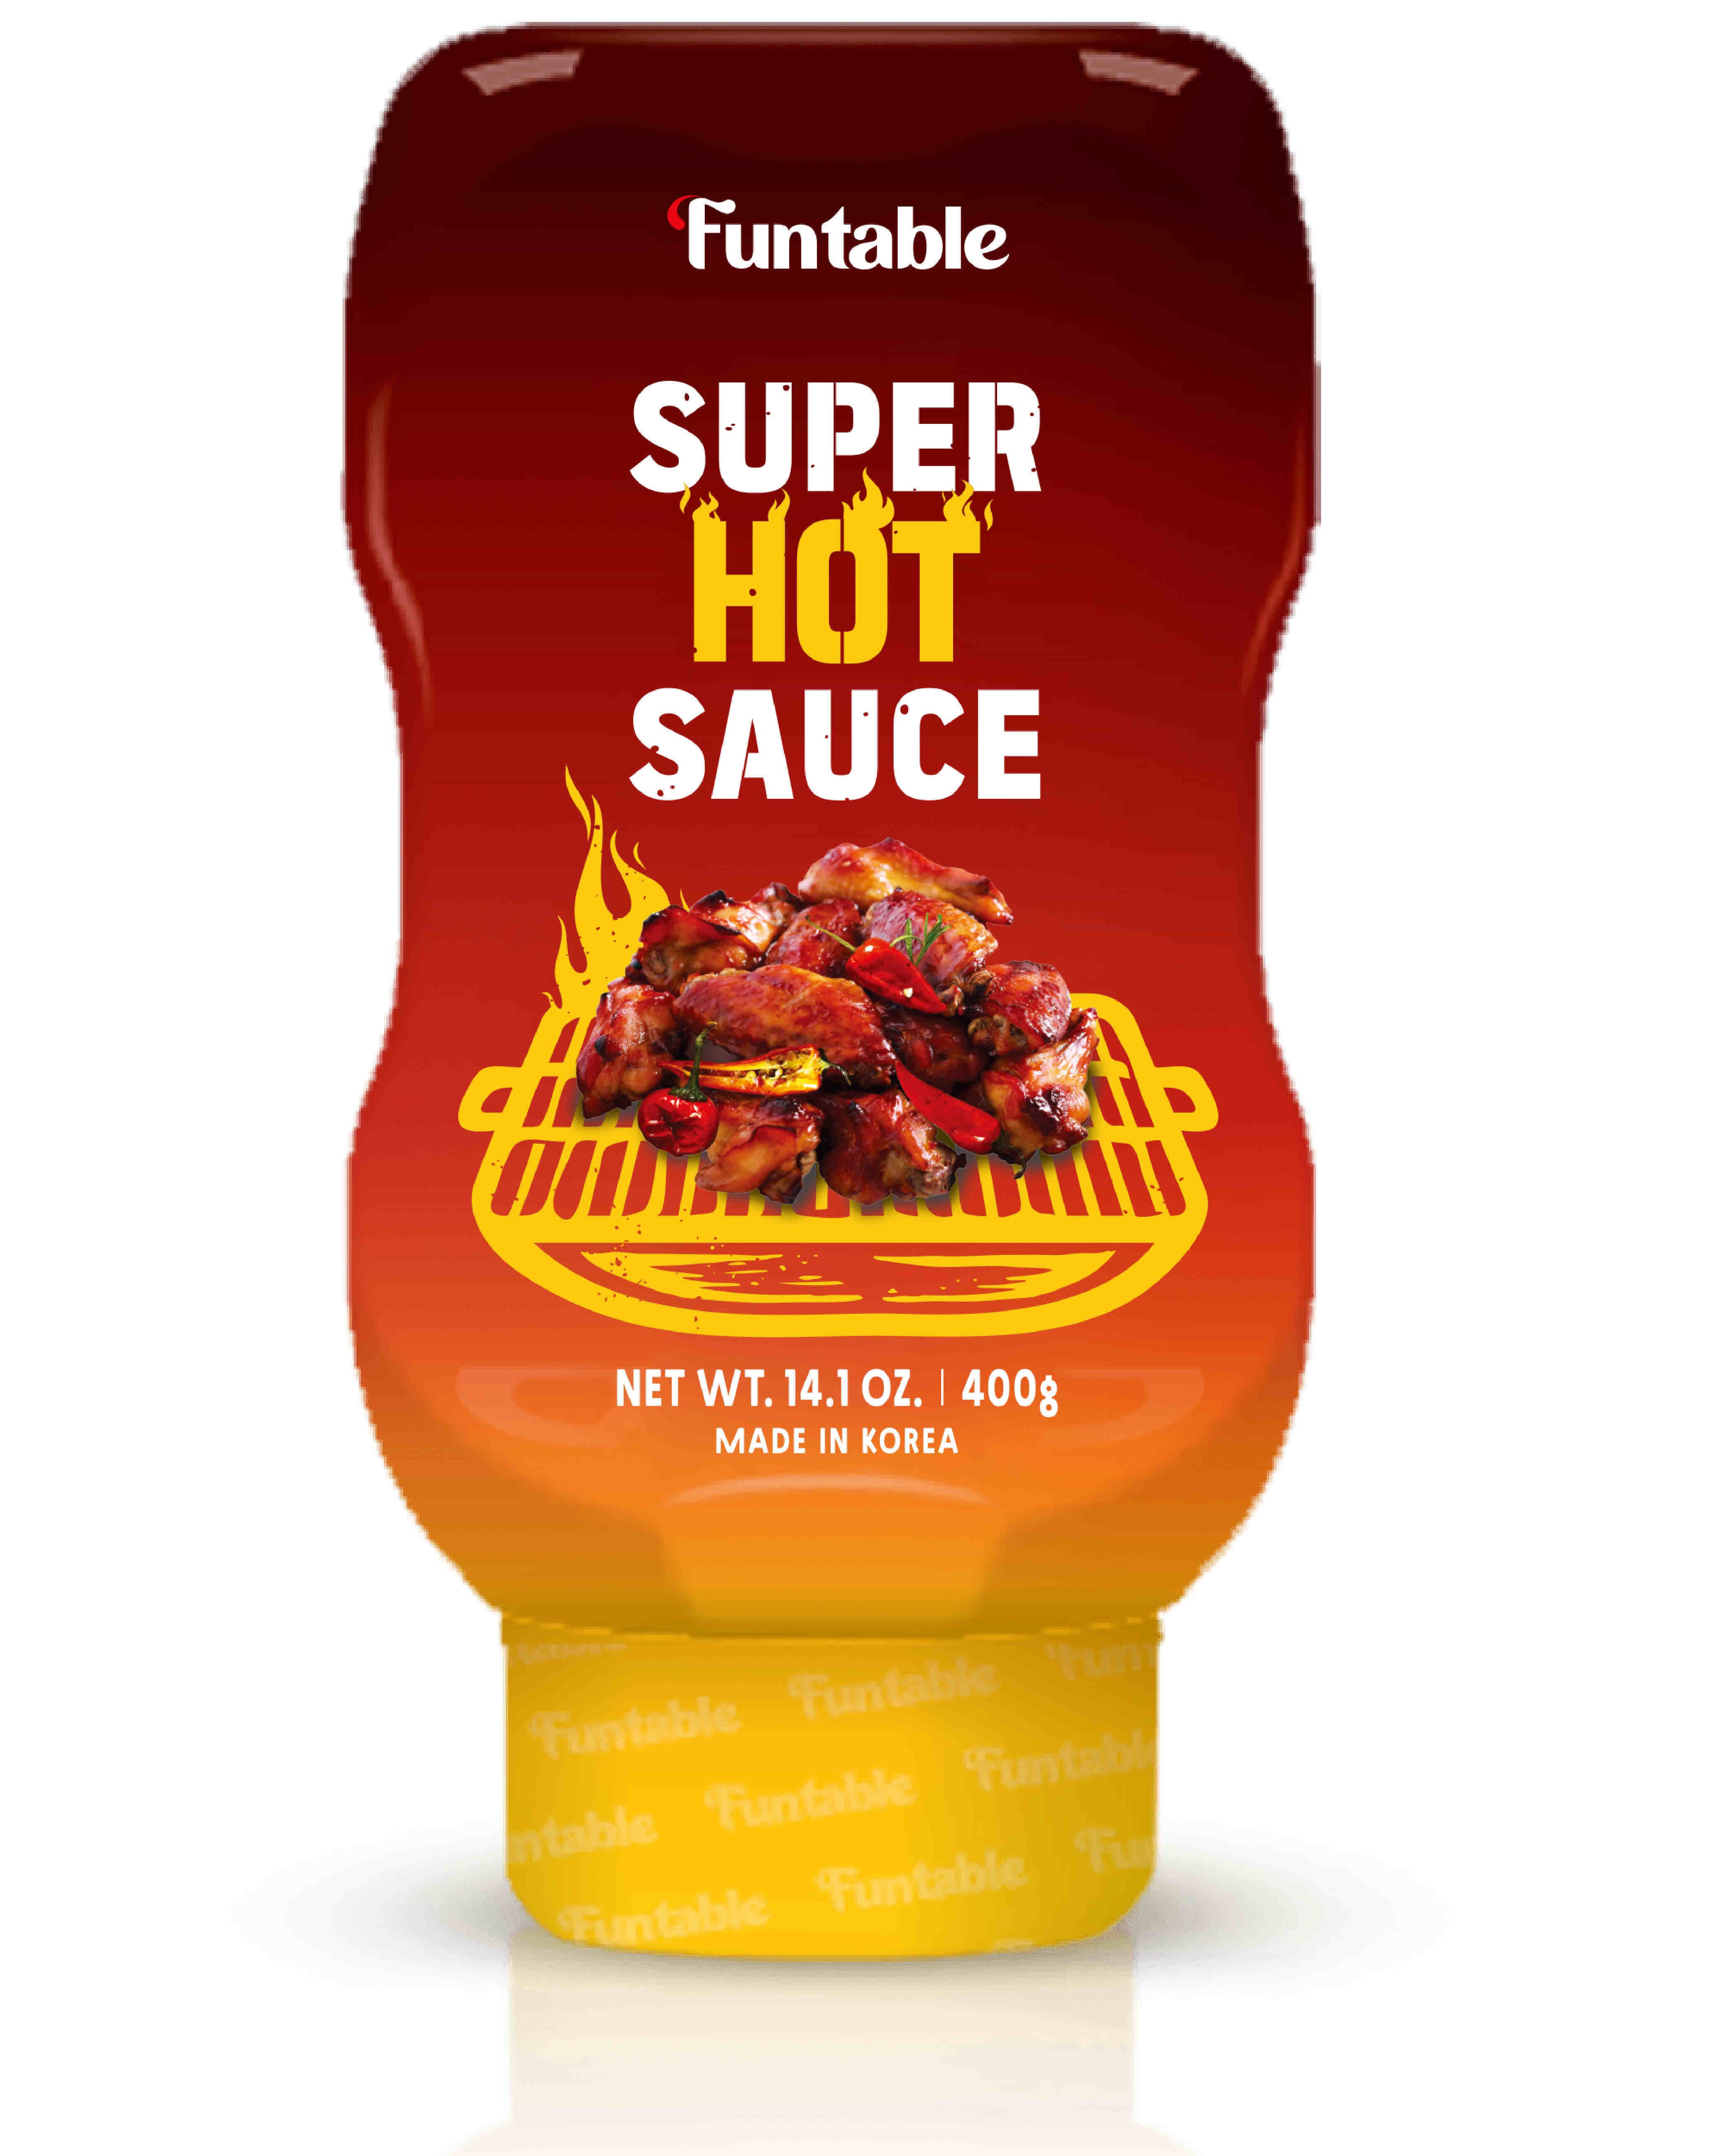 Super Hot Sauce